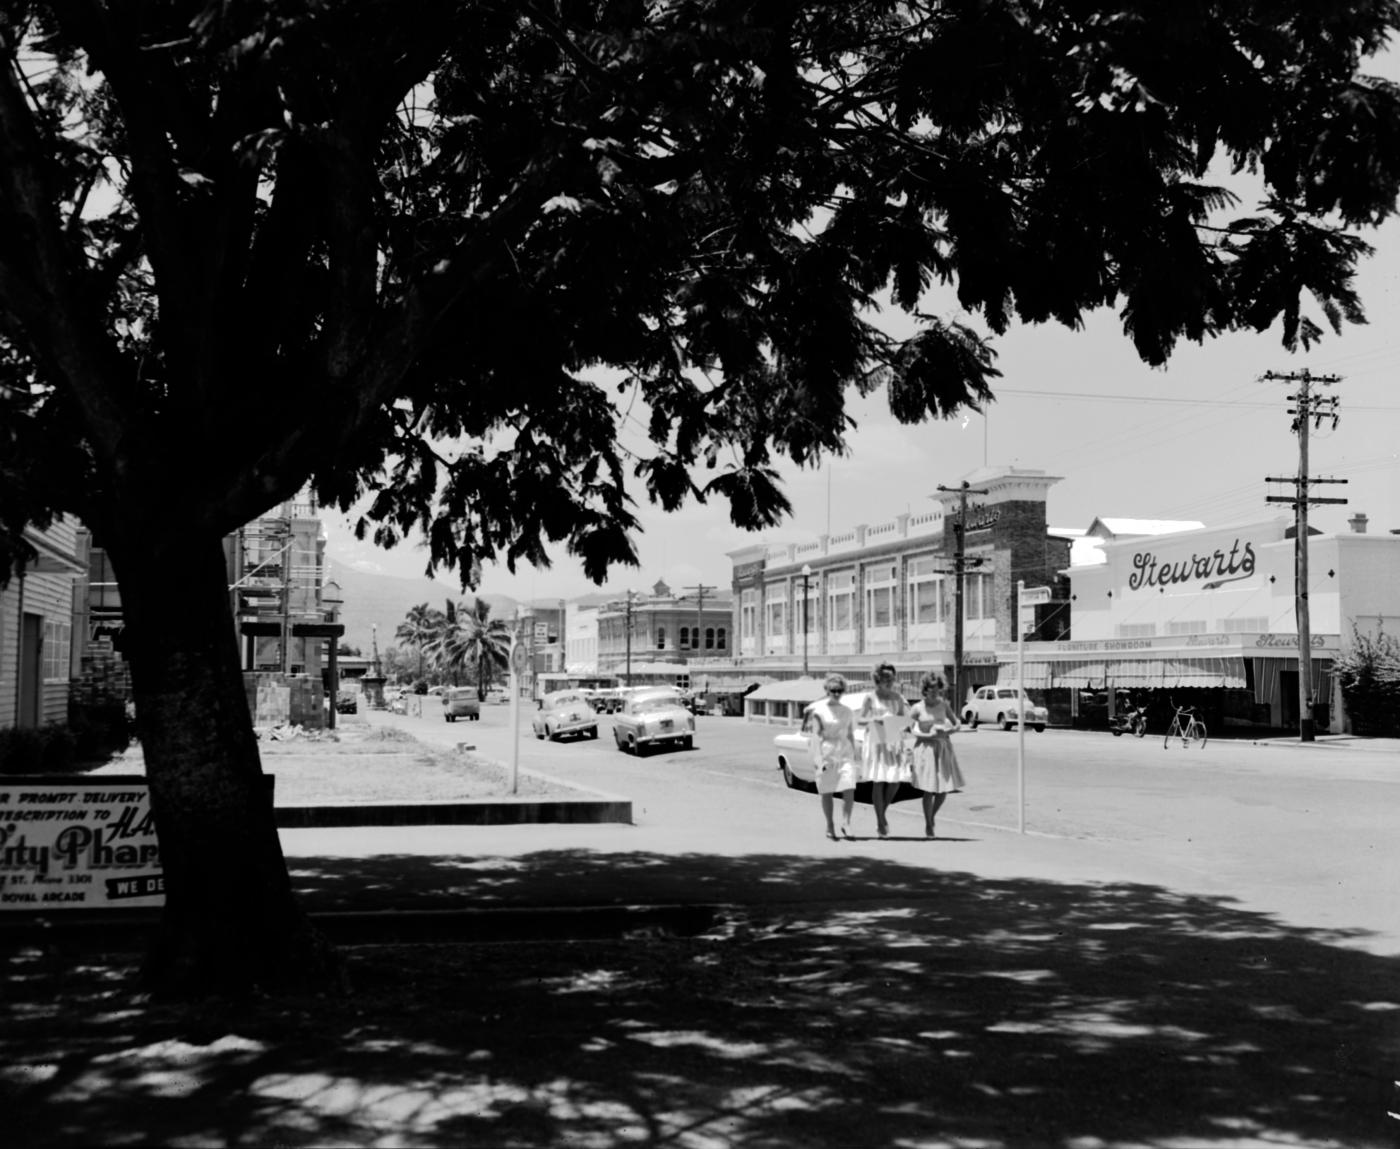 View of Denham Street, Rockhampton featuring cars and buildings